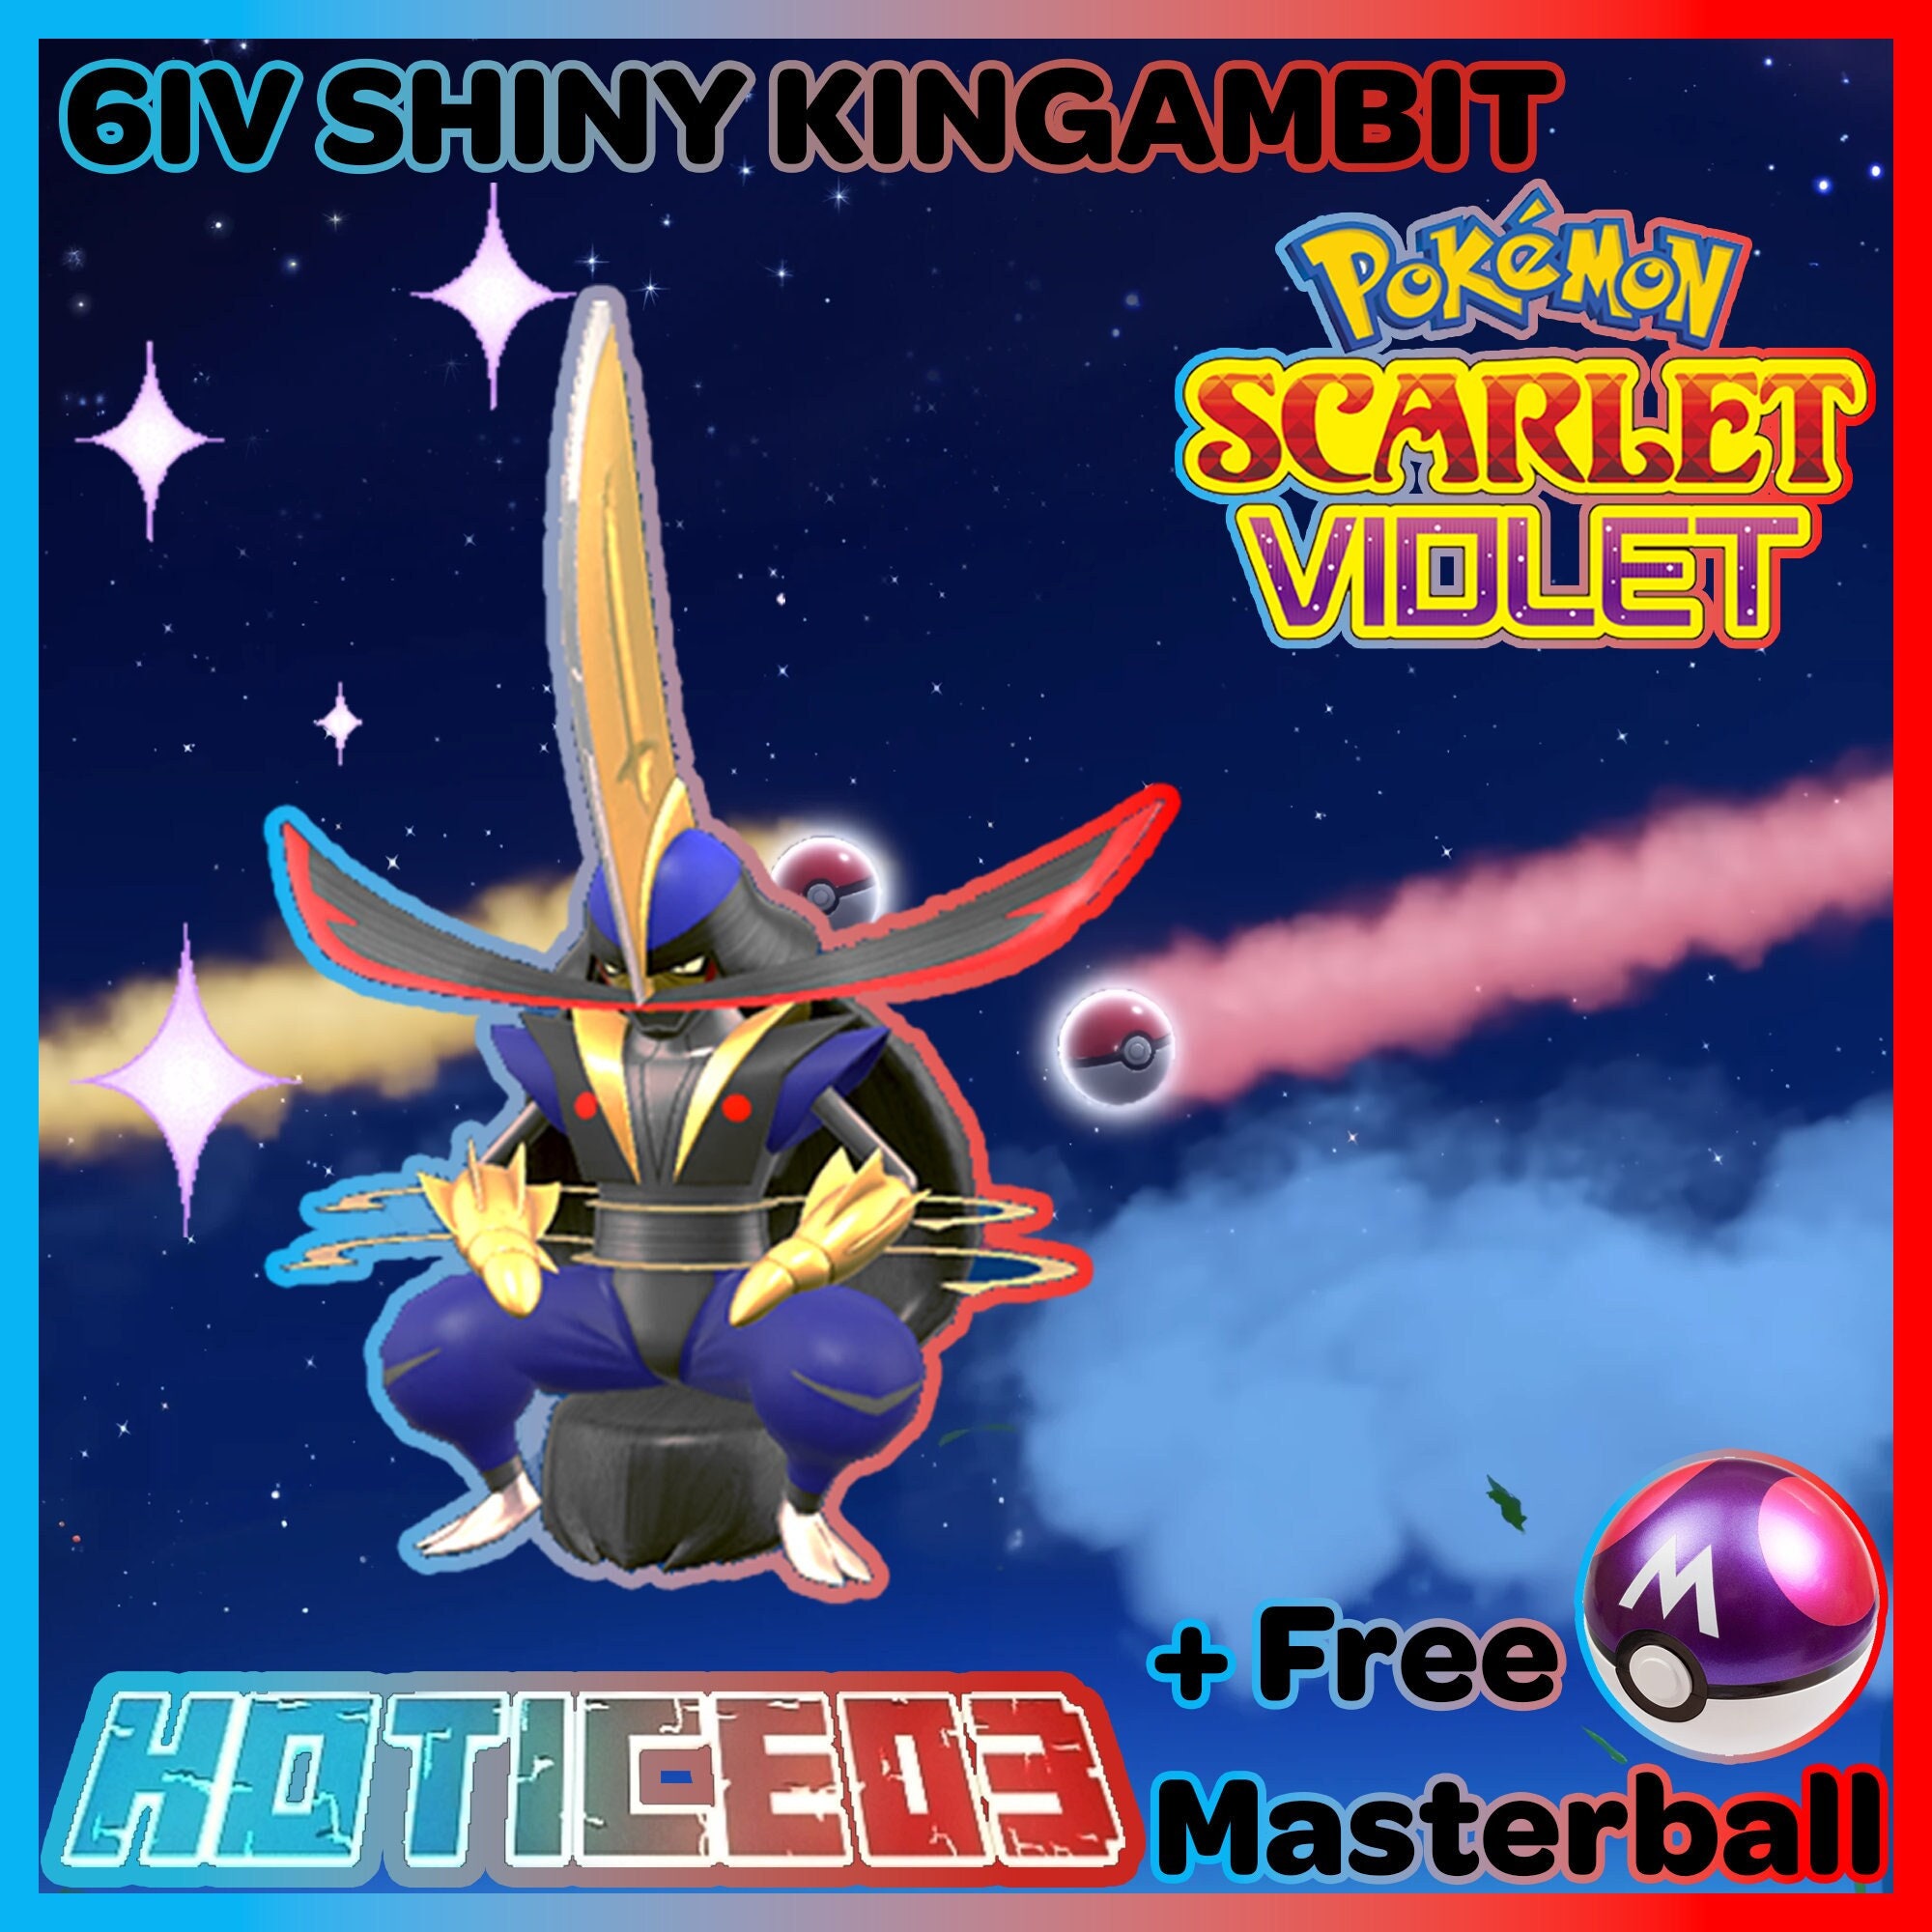 Kingambit SHINY 6IV Pokemon / Ready for competitive battle / + MasterBall /  Bonus 1 Random Pokemon / Pokemon Scarlet and Violet